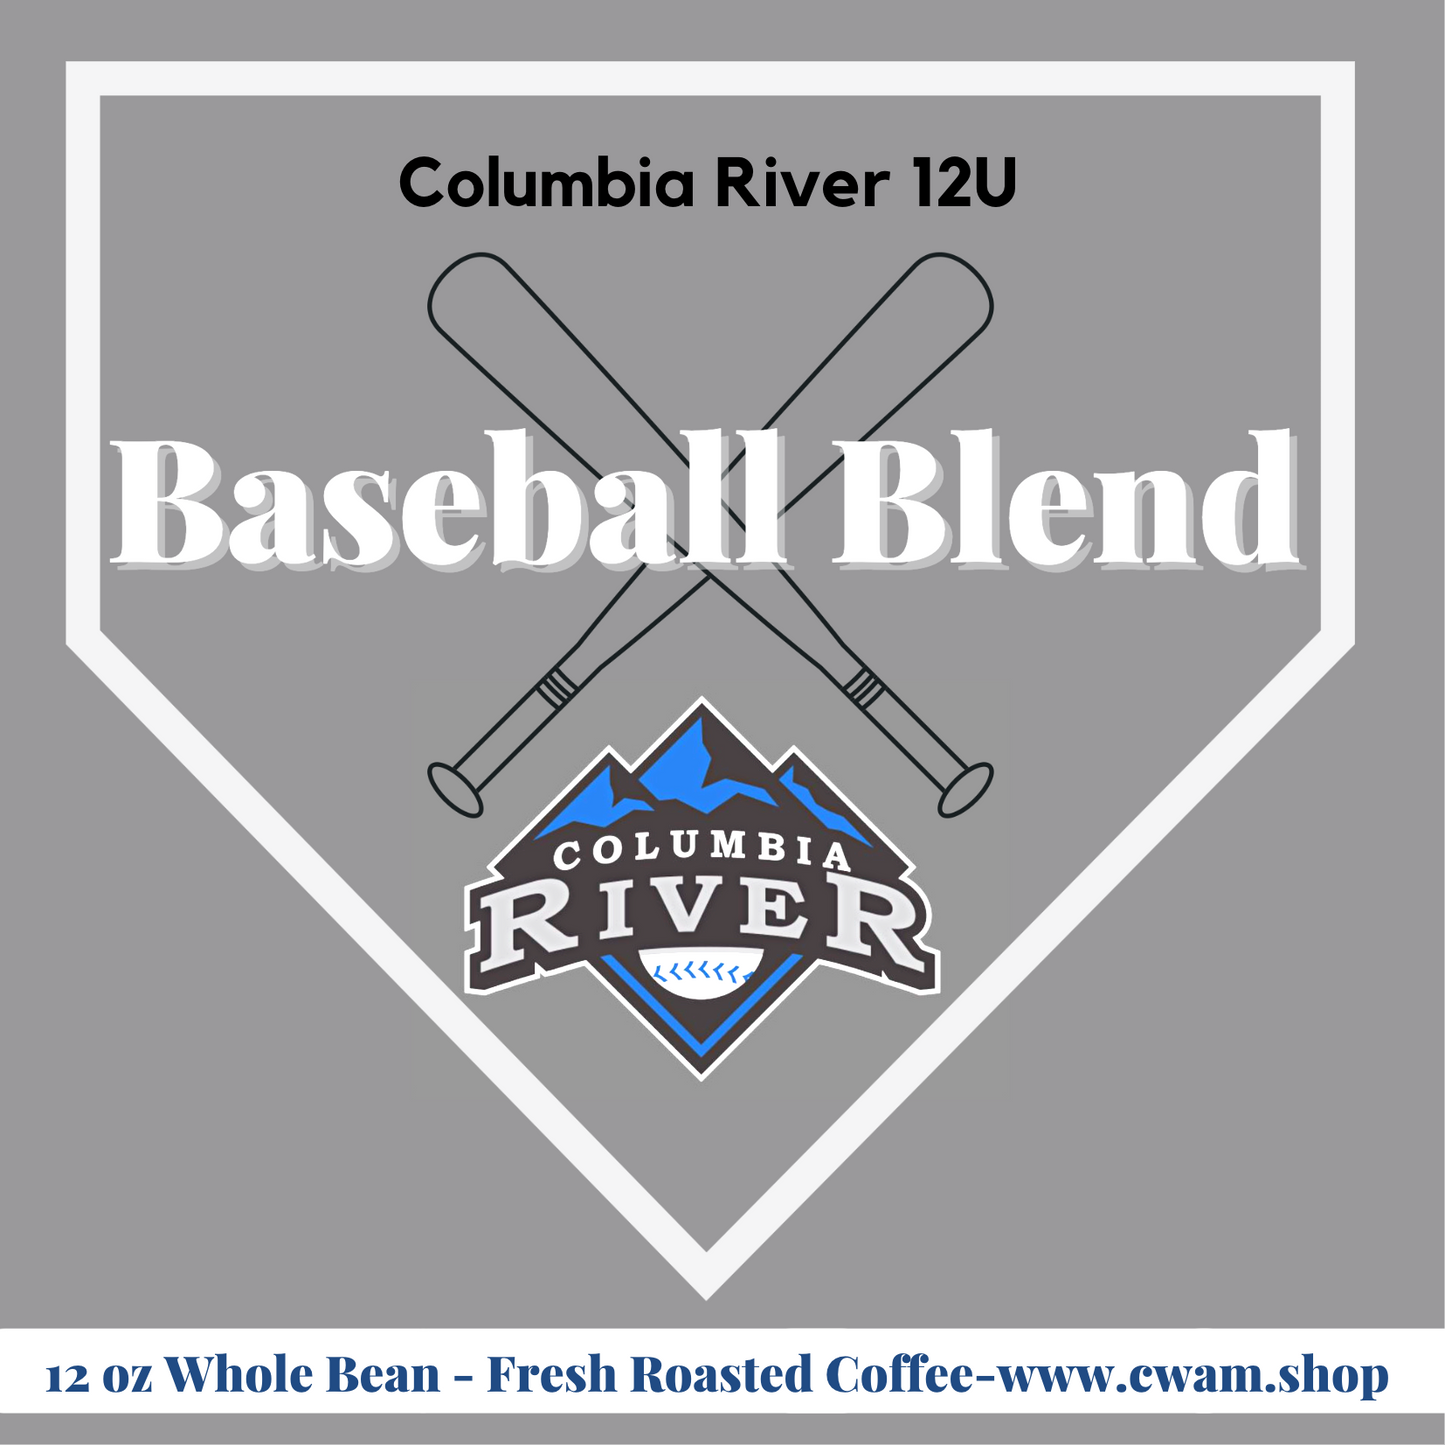 The Baseball Blend (supporting Columbia River 12U Baseball)